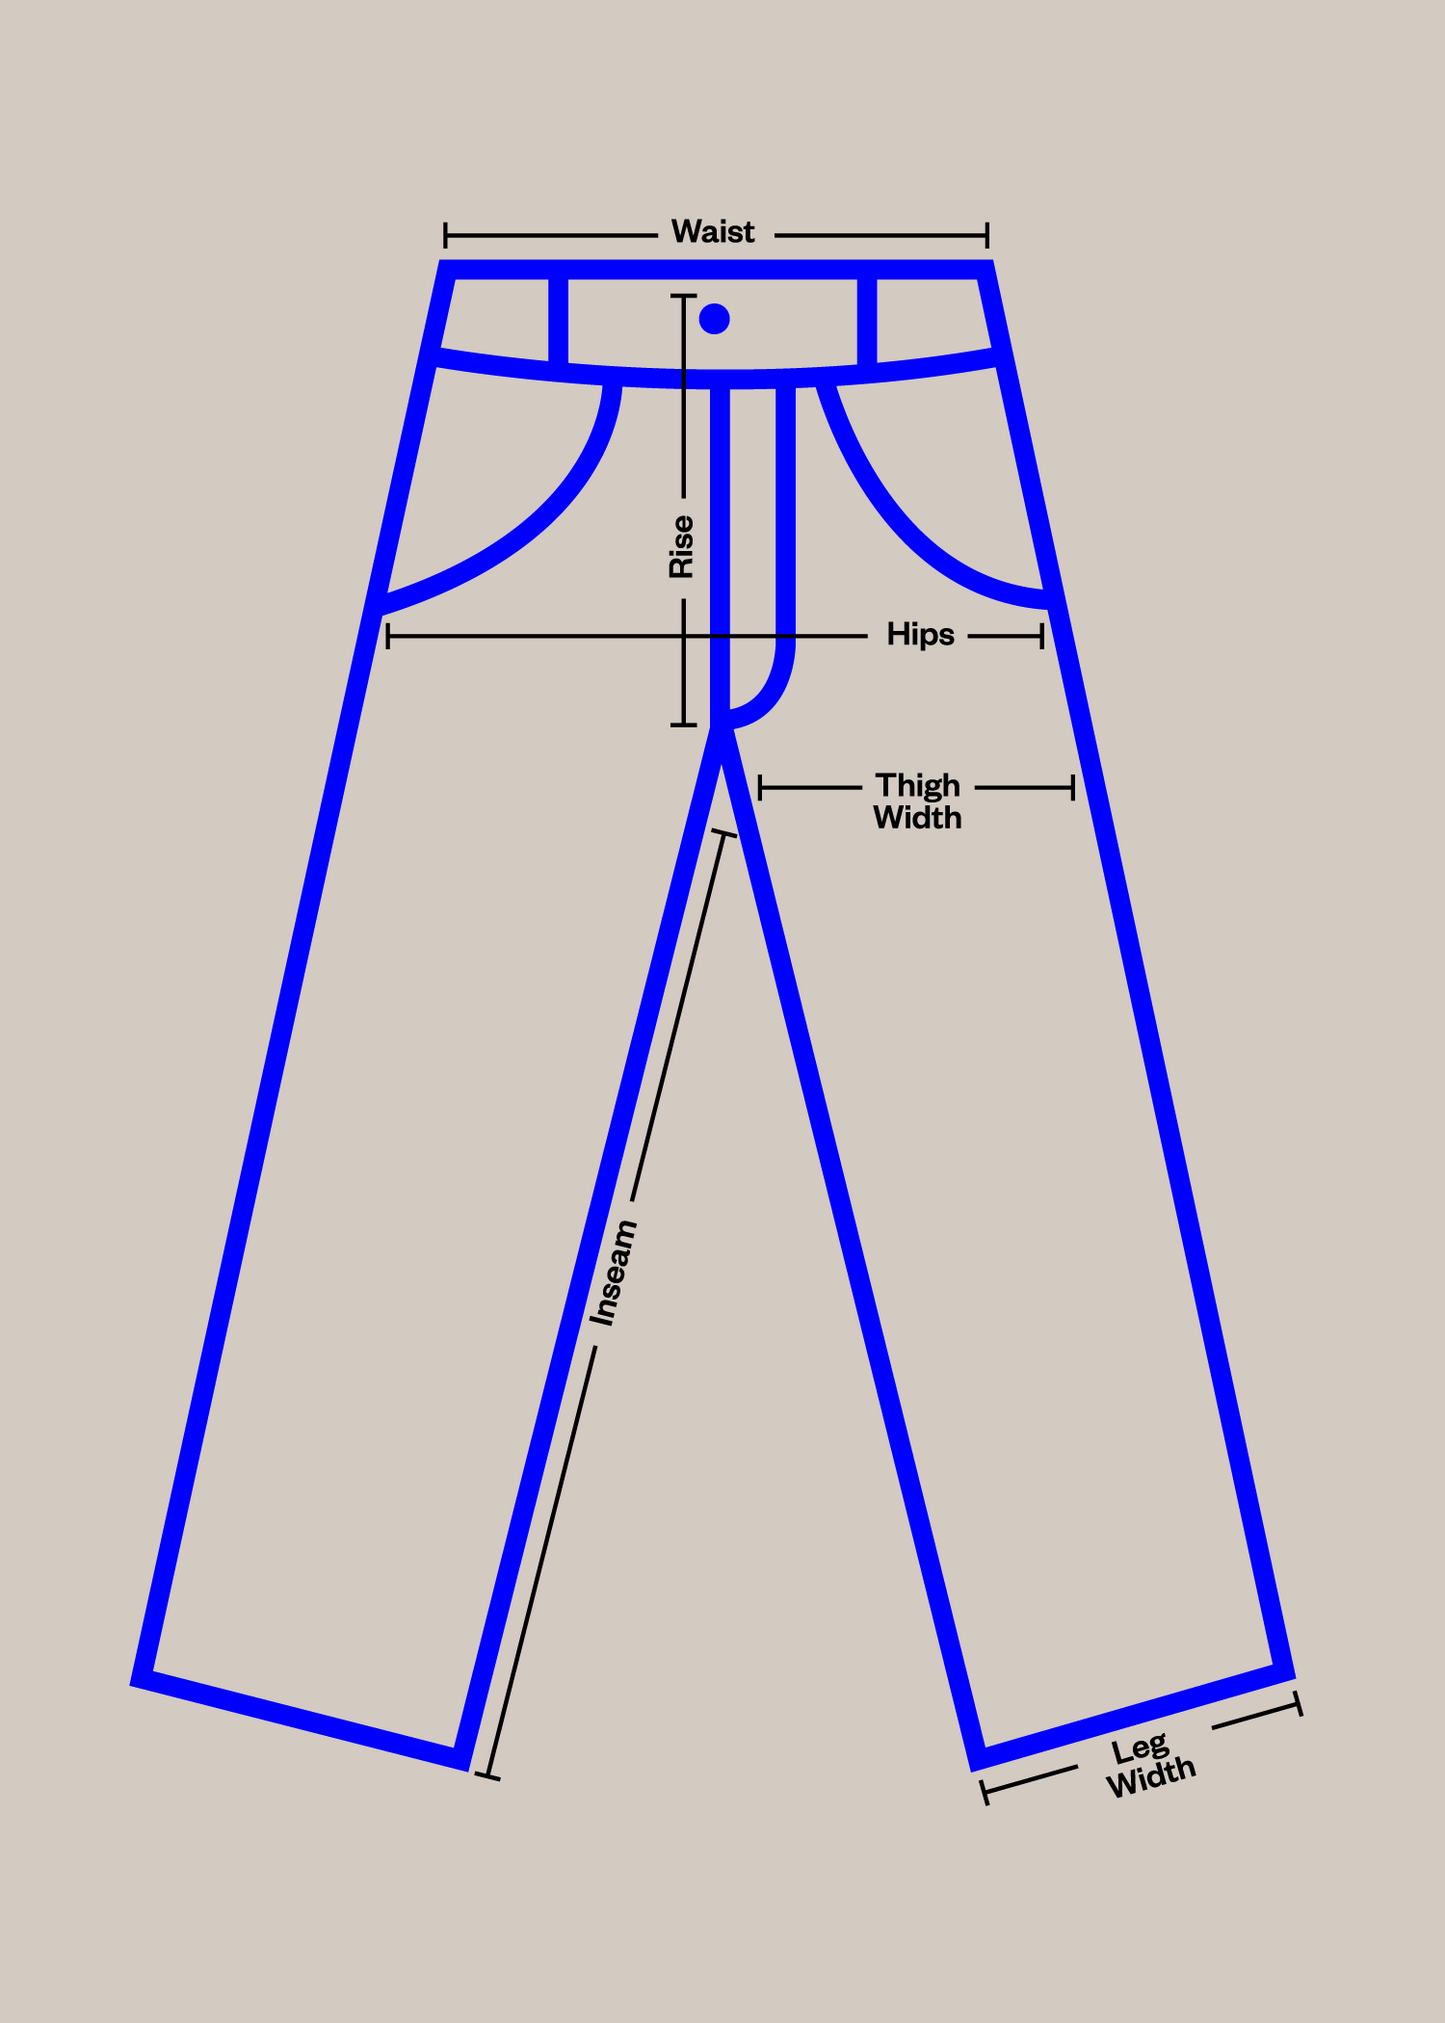 Vintage 1980s USA Works Deadstock Denim Carpenter Pants Size Women's 40 Men's 42